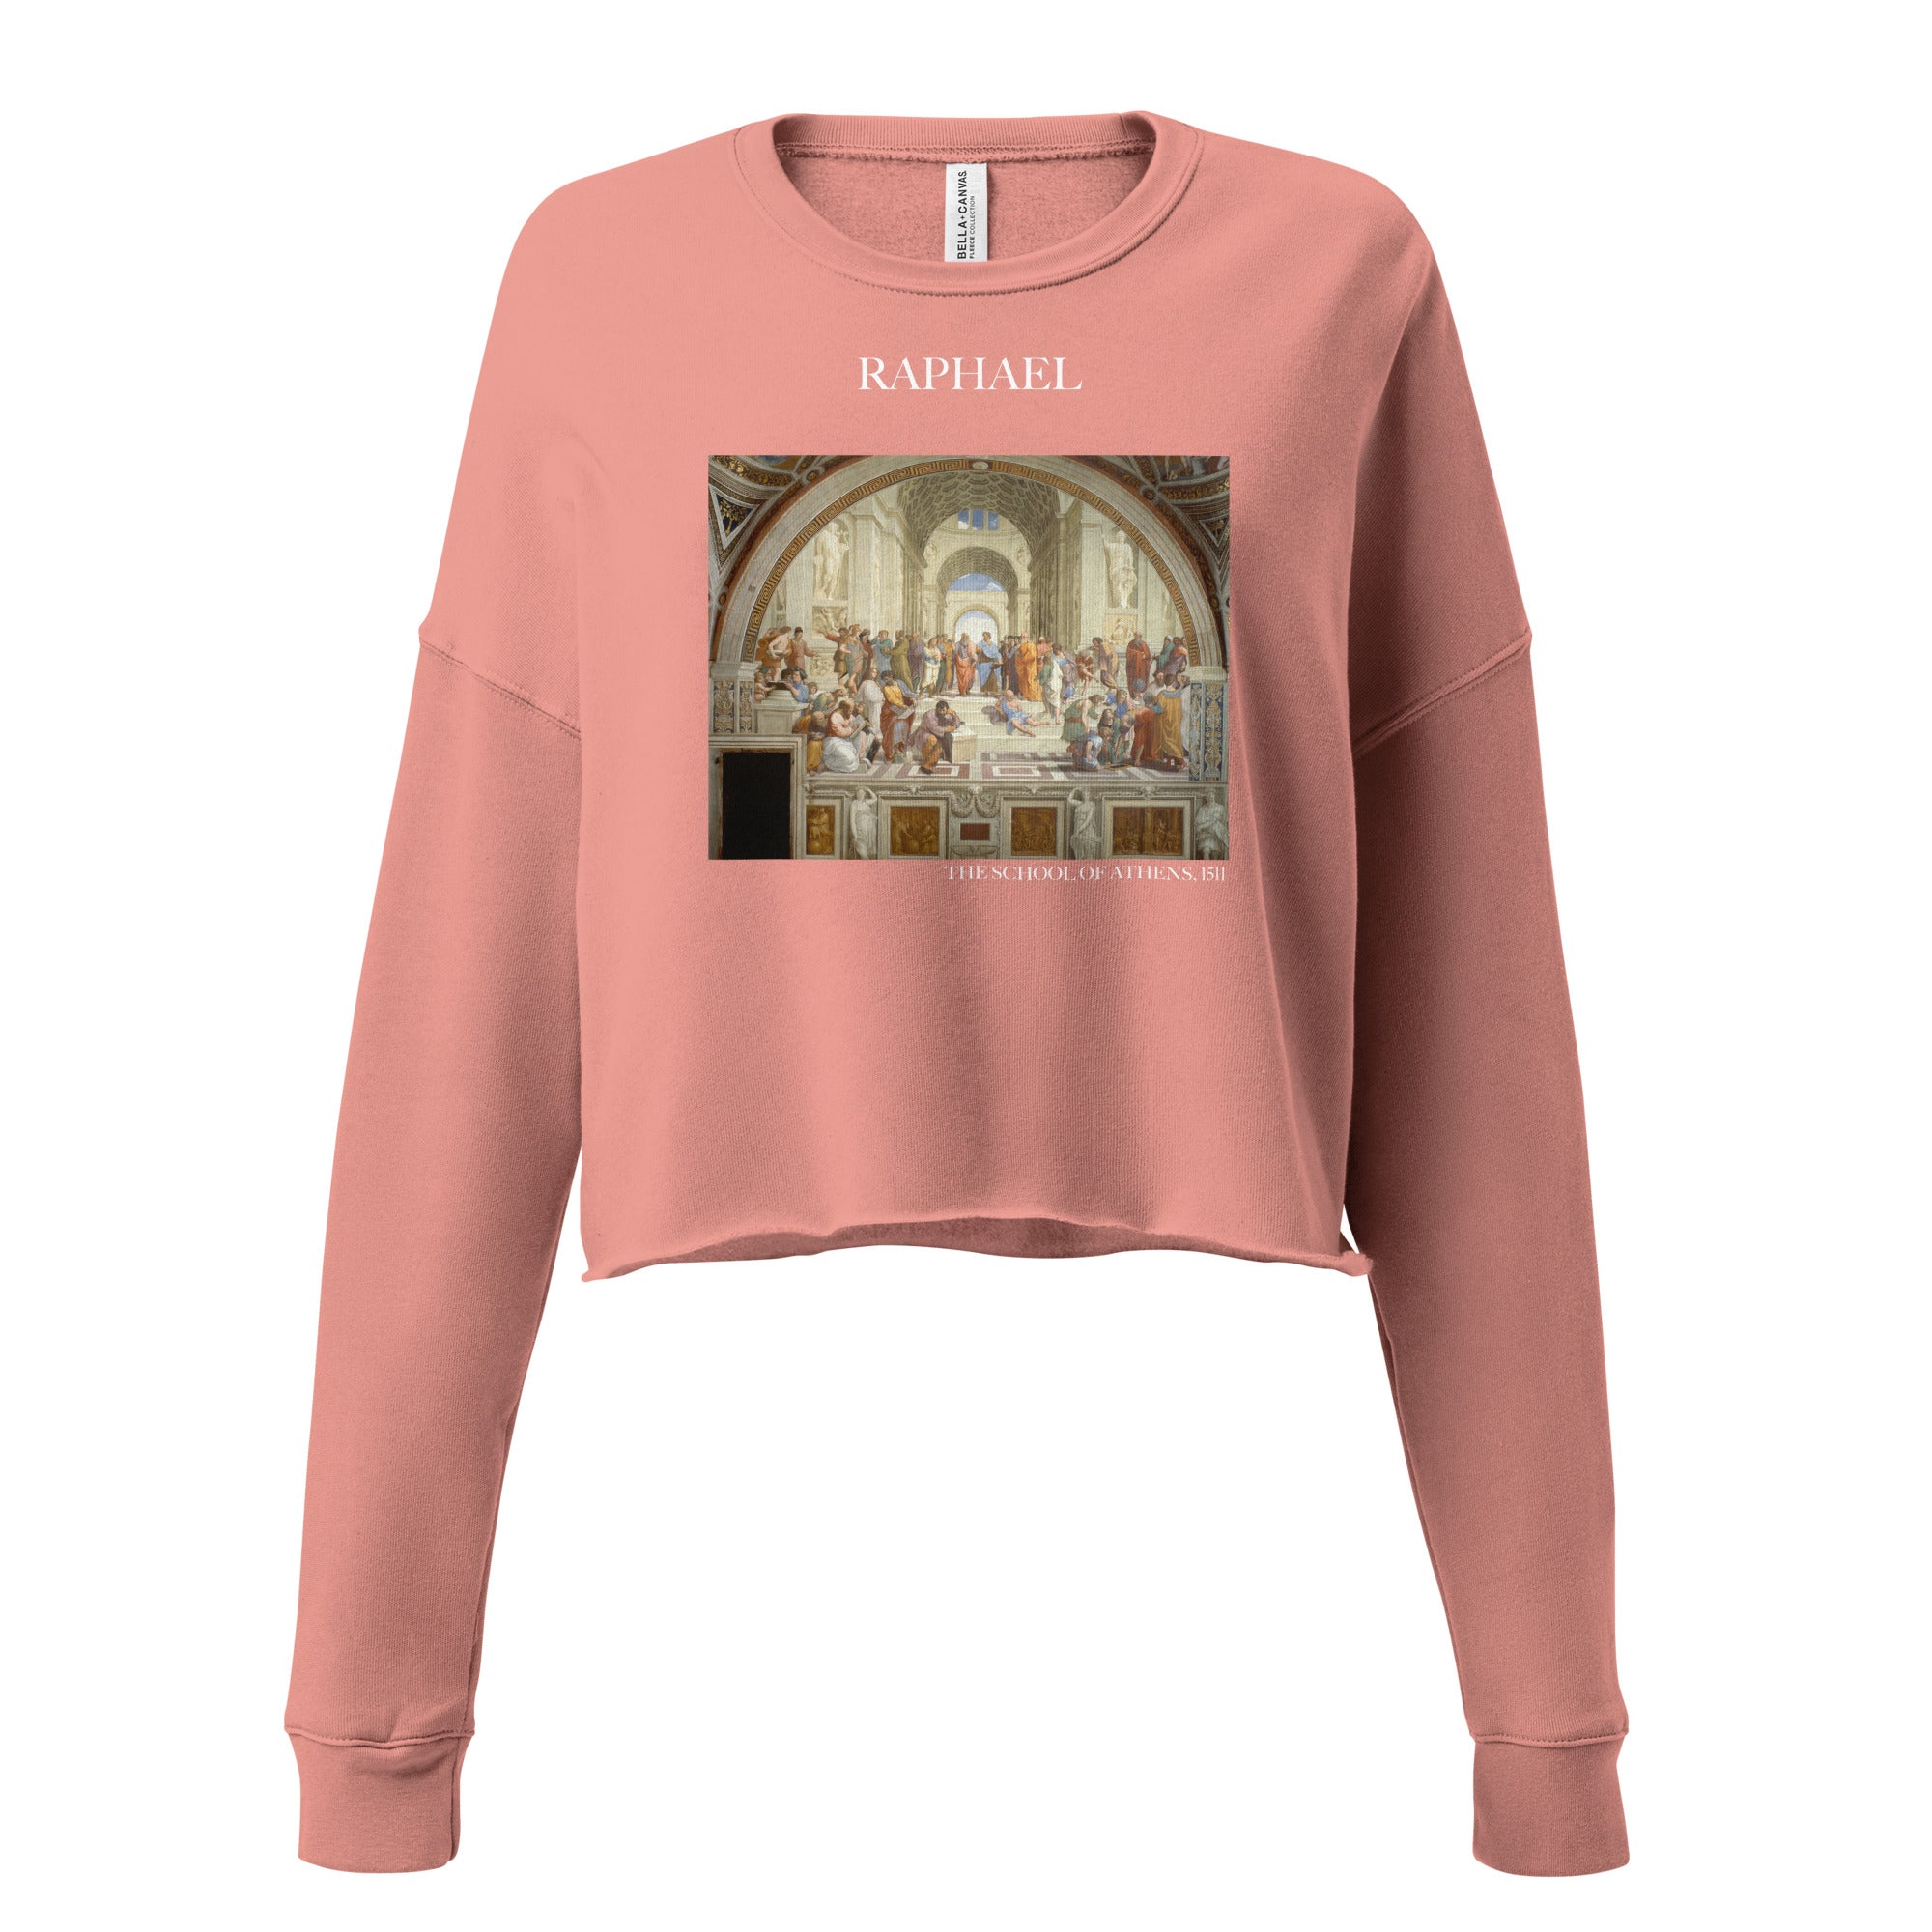 Raphael 'The School of Athens' Famous Painting Cropped Sweatshirt | Premium Art Cropped Sweatshirt